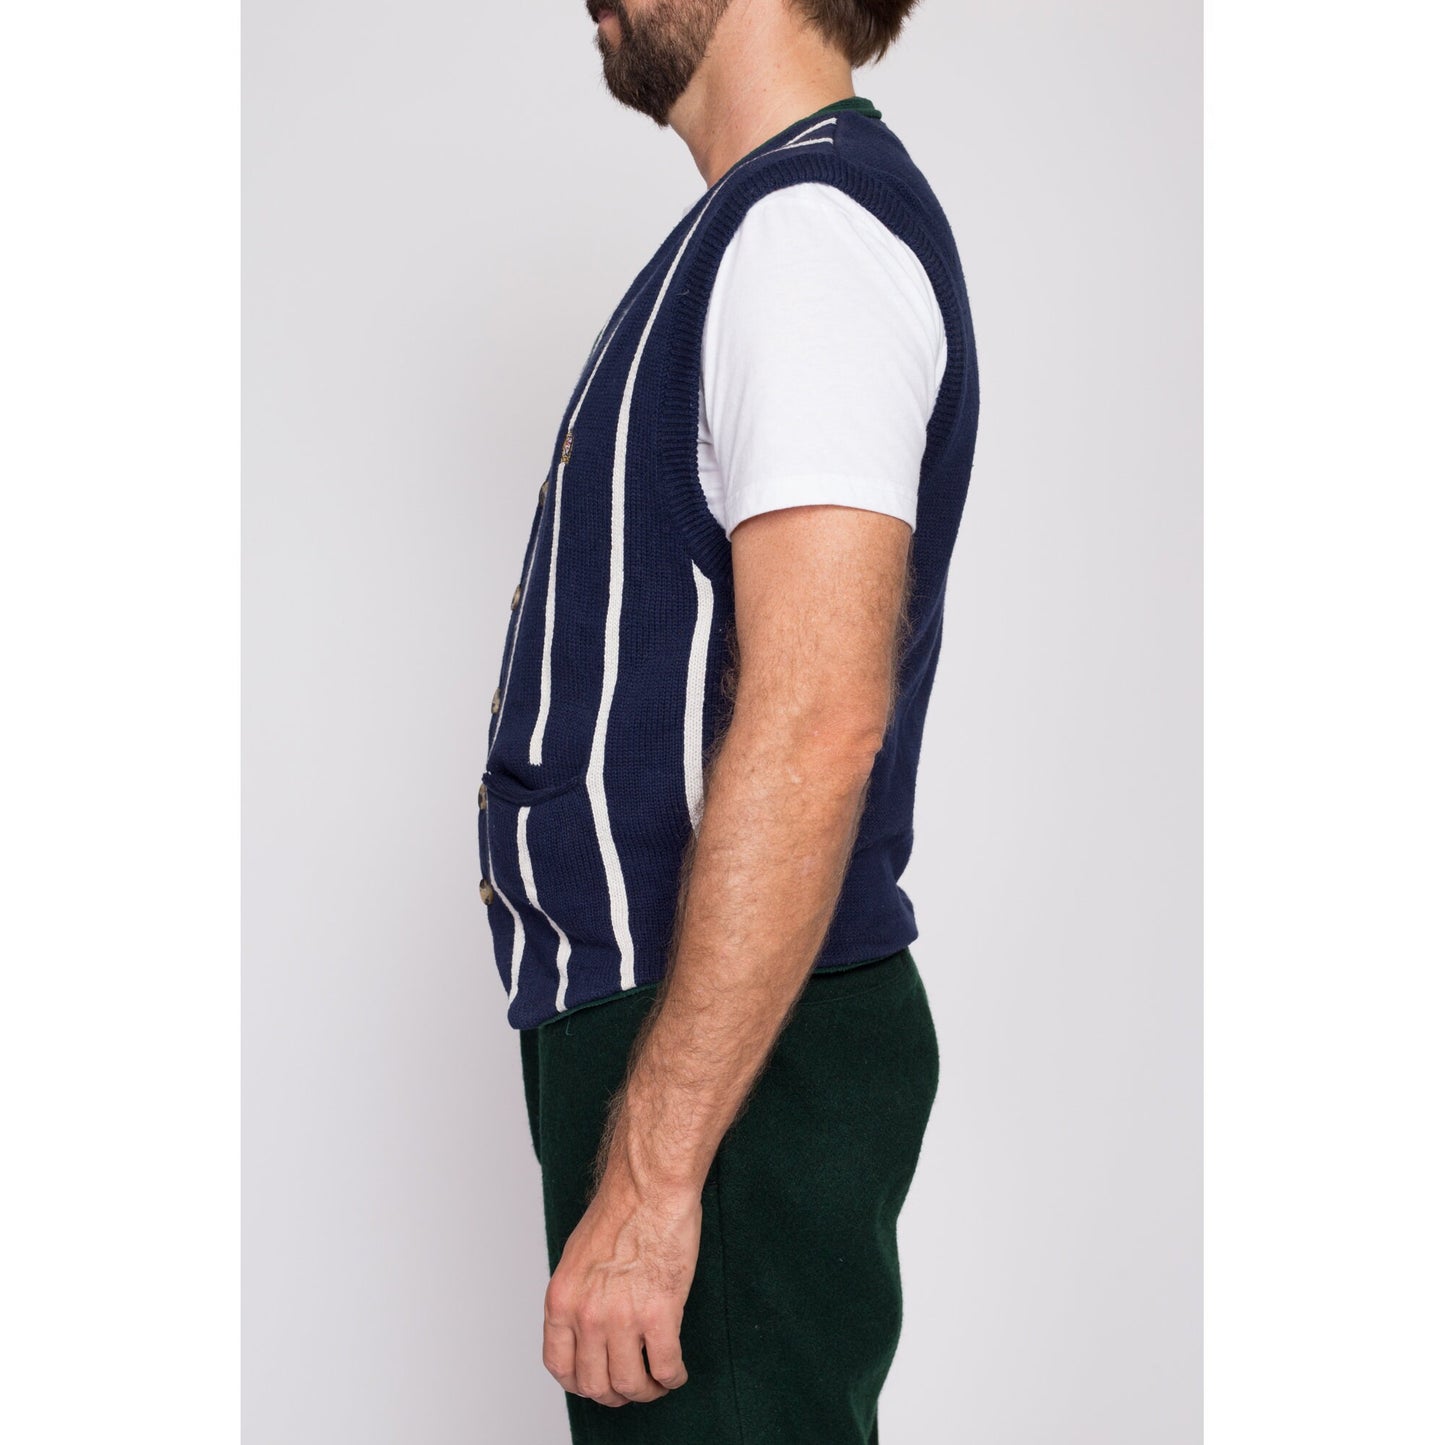 M| 80s Striped Cotton Knit Sweater Vest - Men's Medium | Vintage Blue Green Button Up V Neck Sleeveless Cardigan